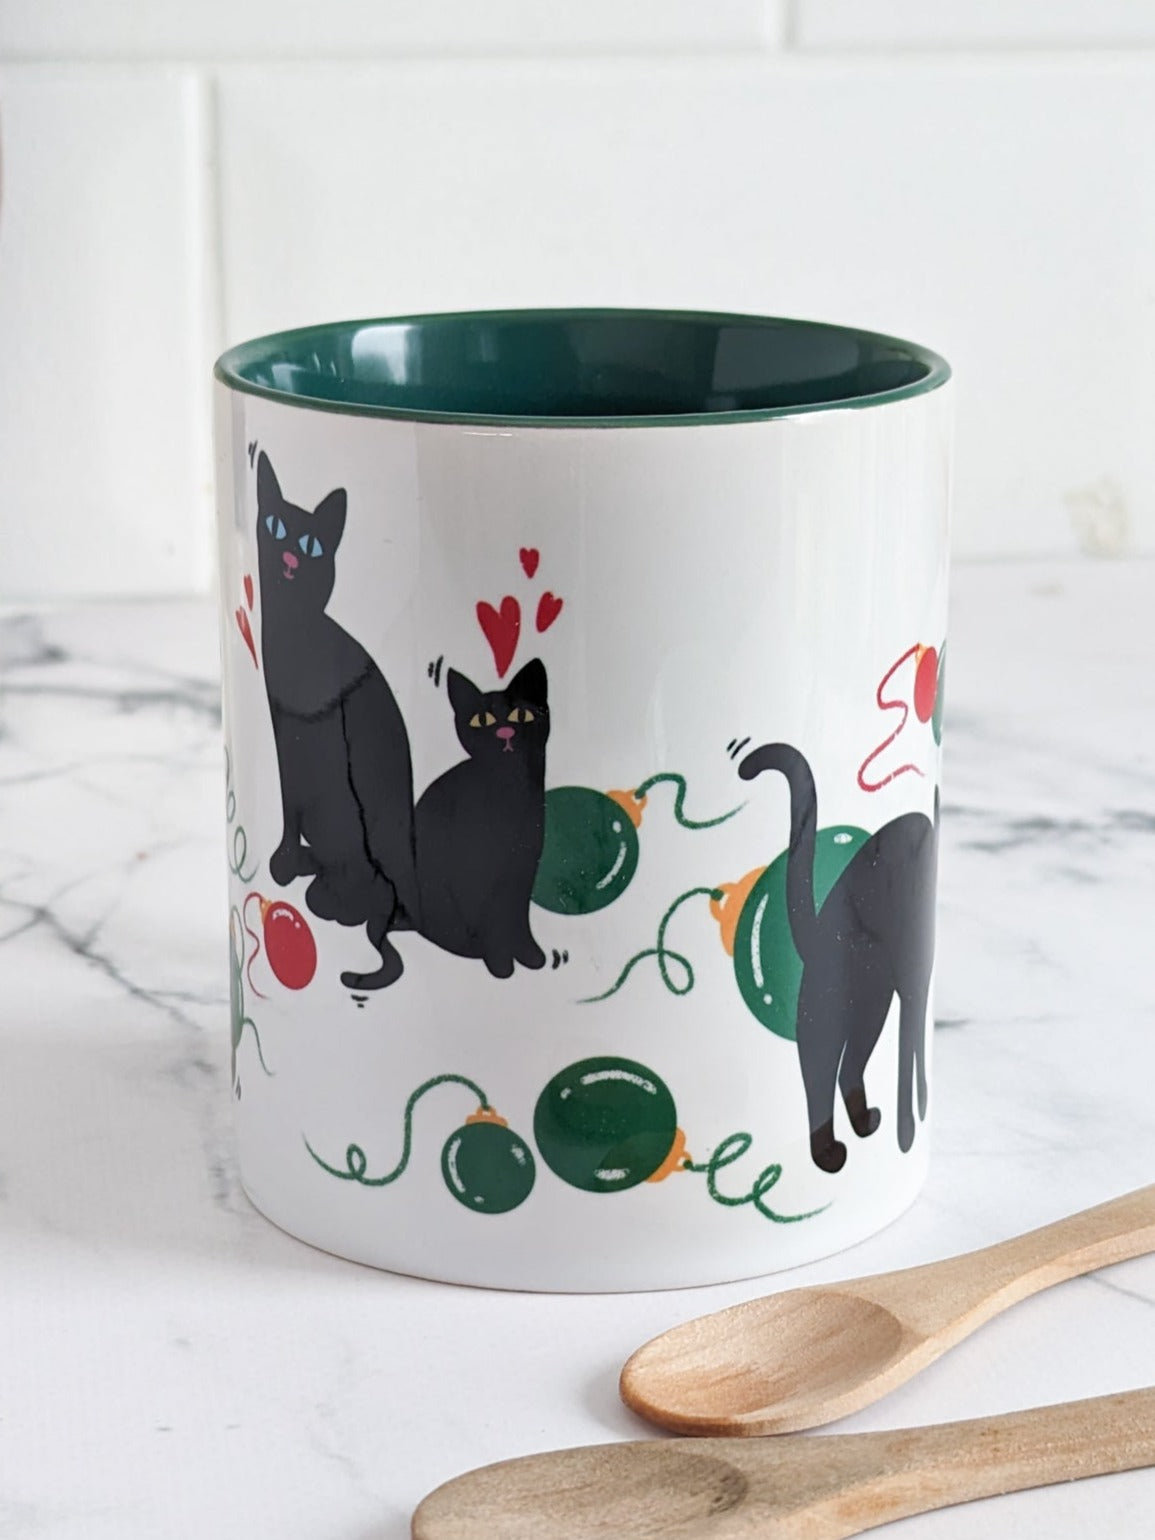 Festive Felines – limited edition ceramic mug